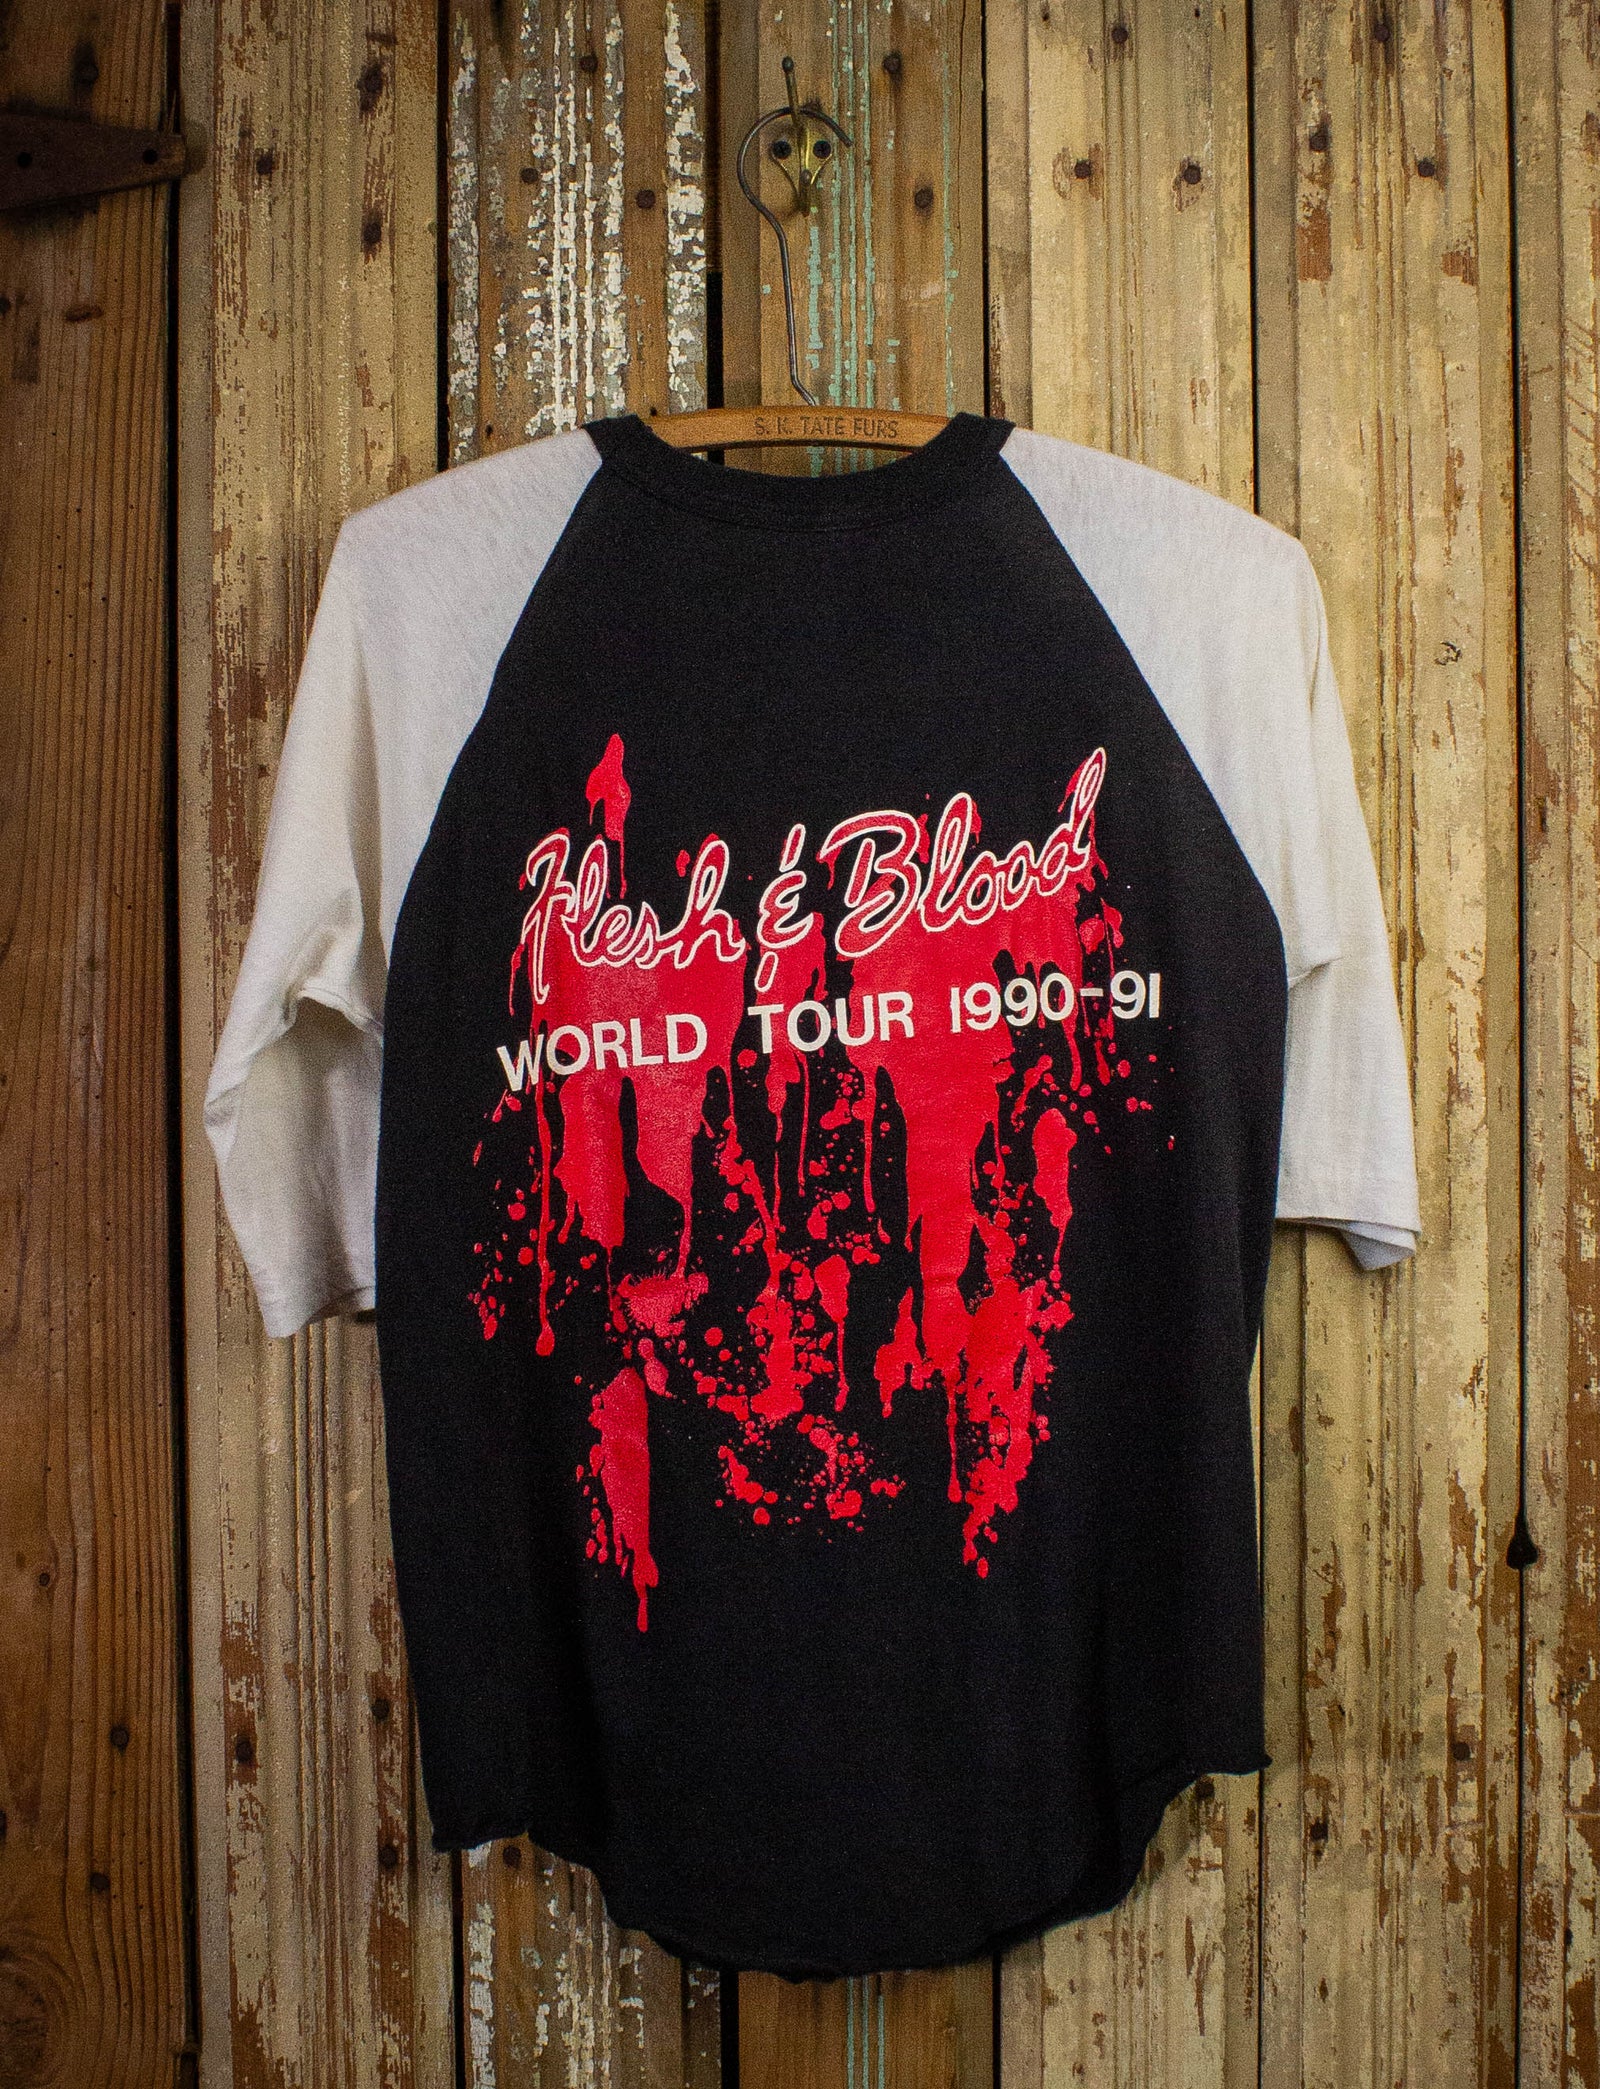 Vintage Poison Flesh and Blood Raglan Concert T Shirt 1990-91 Black and White Medium